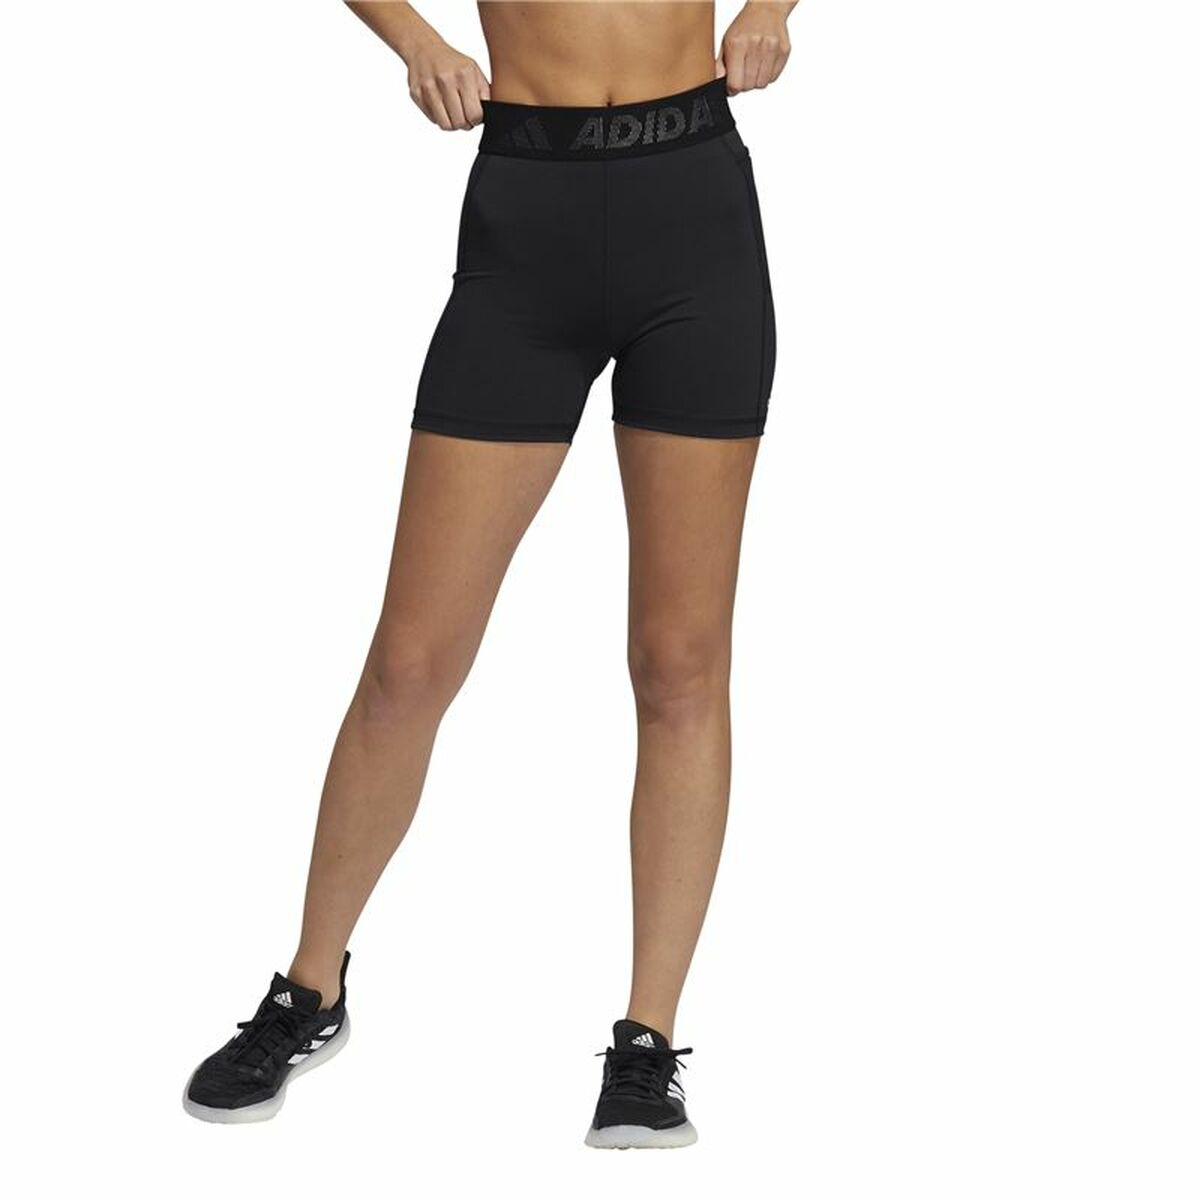 Sport leggings for Women Adidas Techfit Badge Black